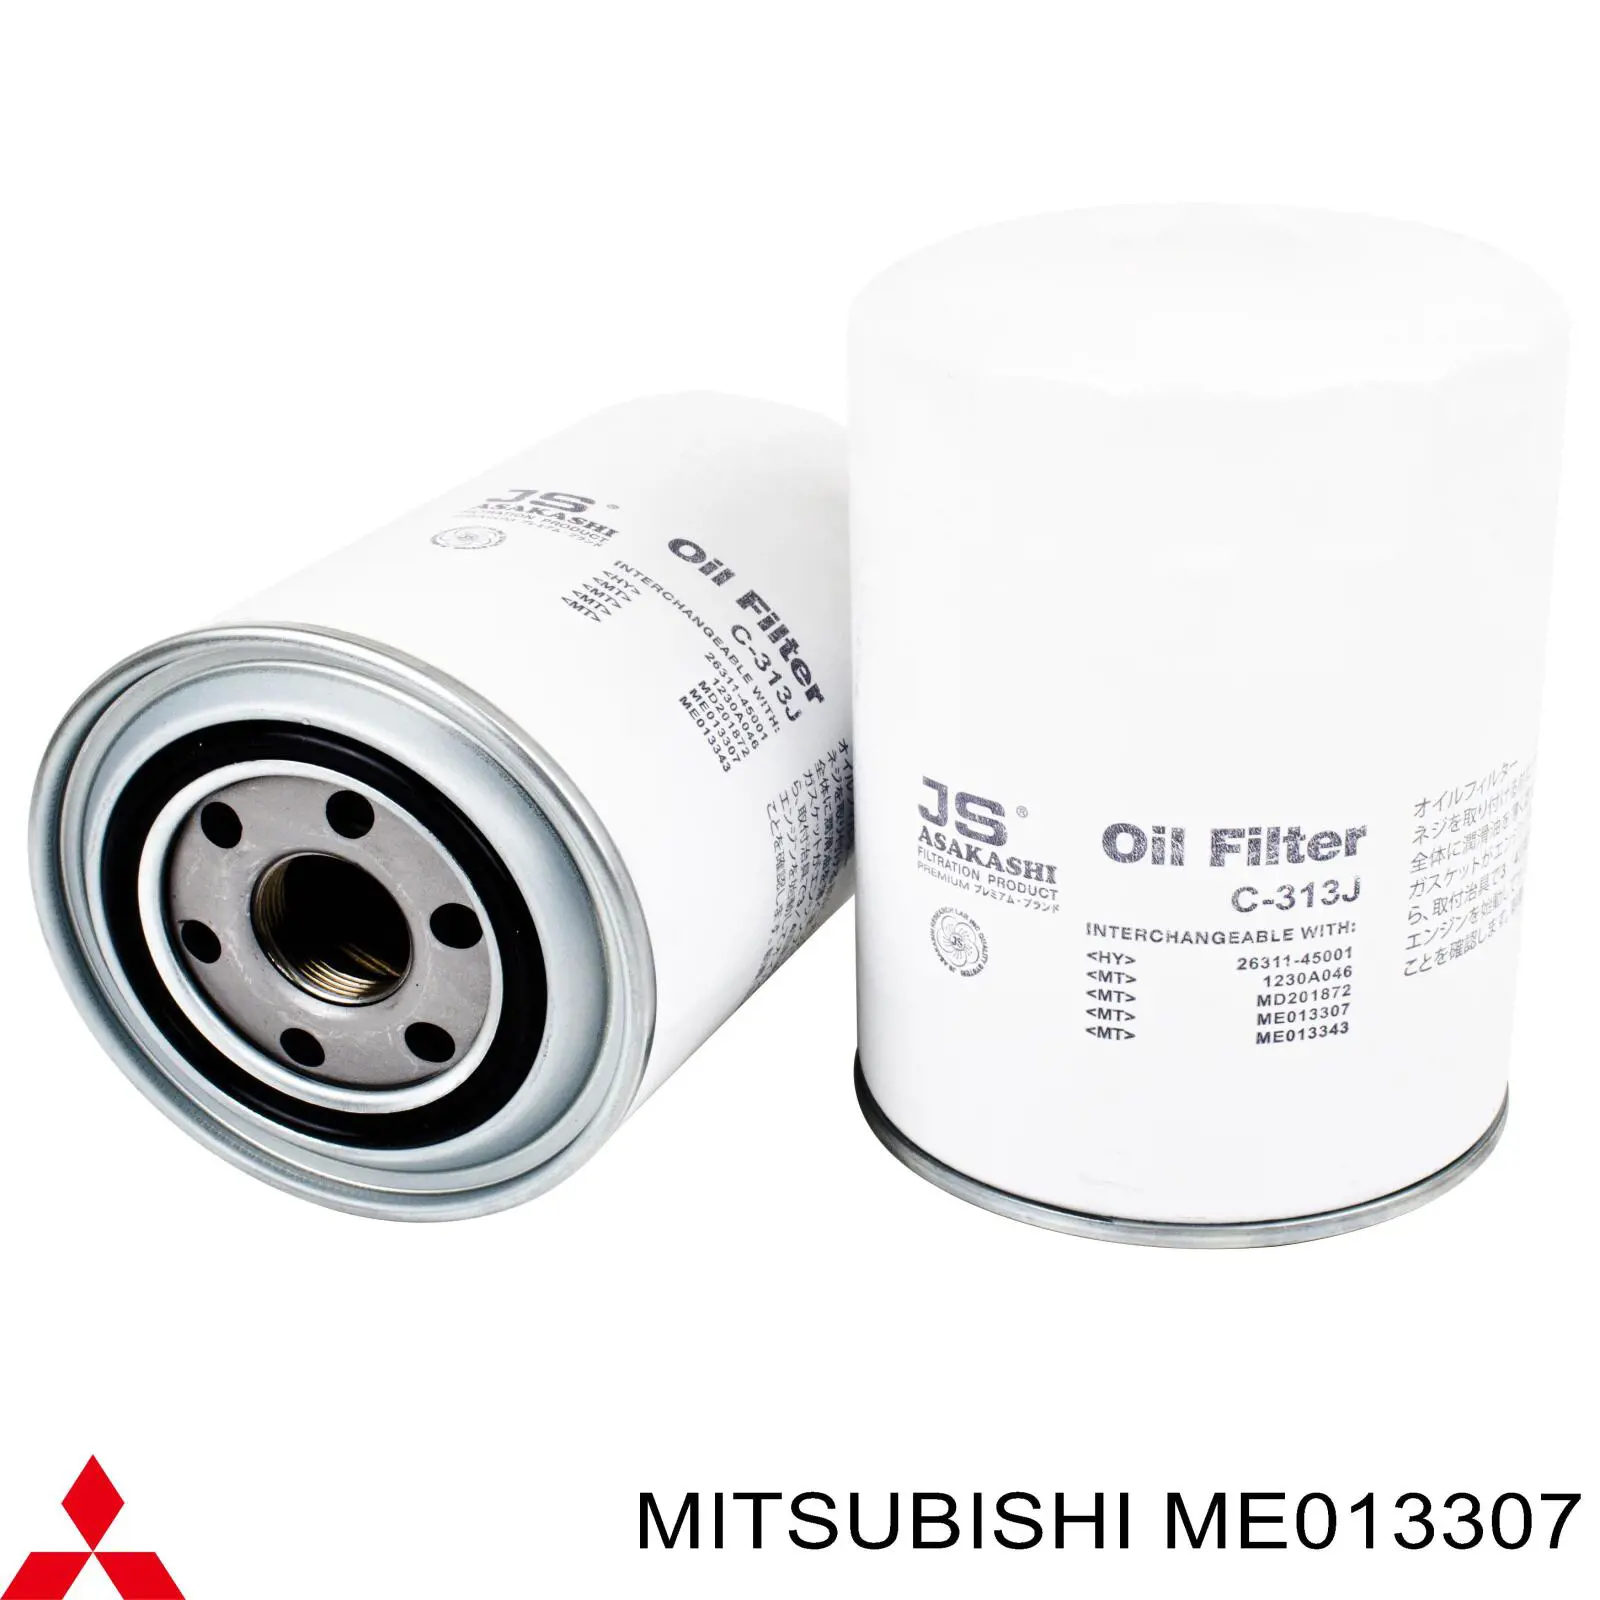 ME013307 Mitsubishi filtro de aceite